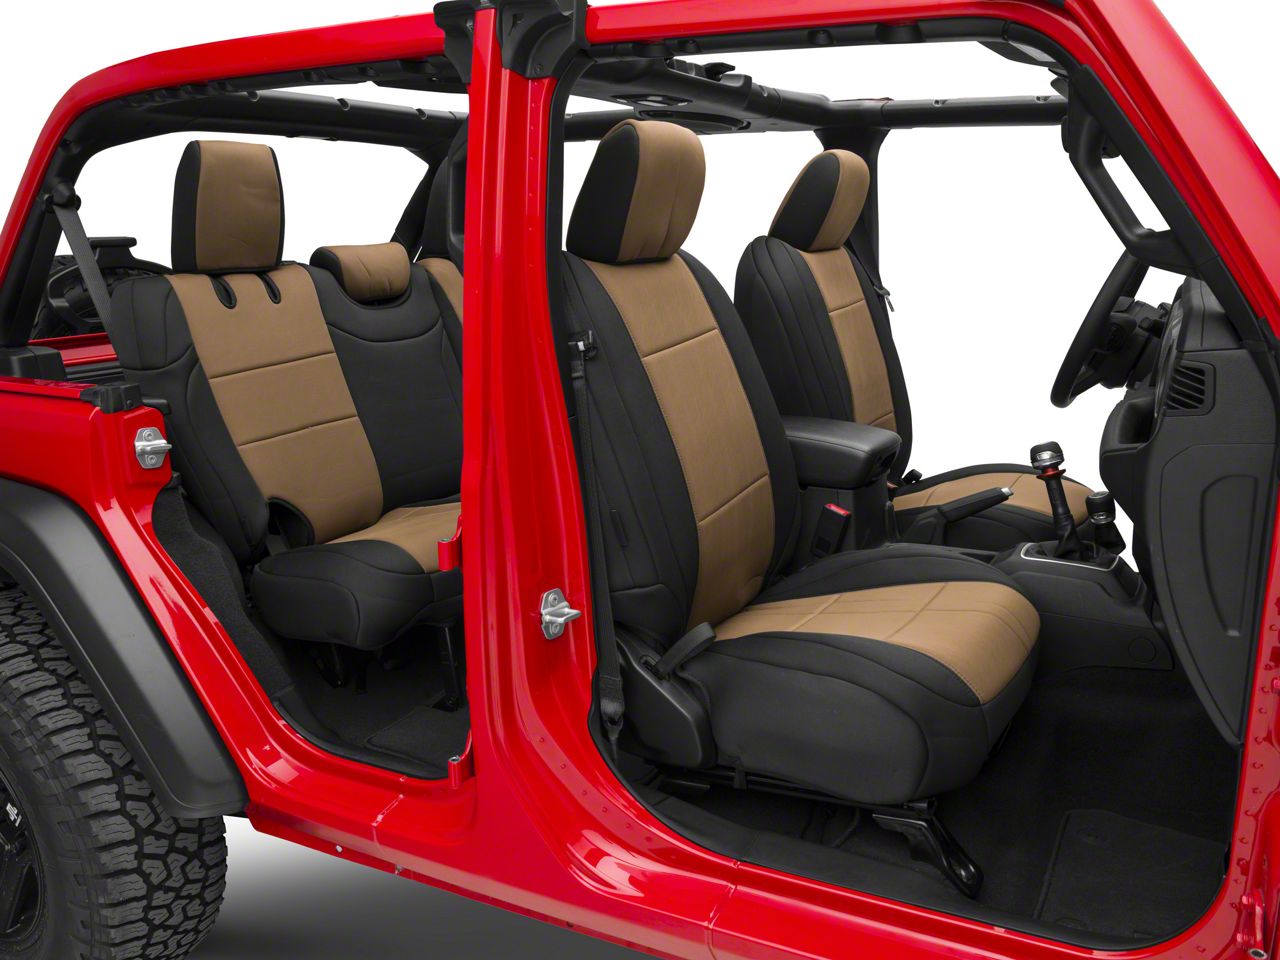 Smittybilt Jeep Wrangler Neoprene Front And Rear Seat Covers Black Tan 472125 18 21 Jl 4 Door Excluding Rubicon Free - Jeep Wrangler Rubicon 2020 Seat Covers